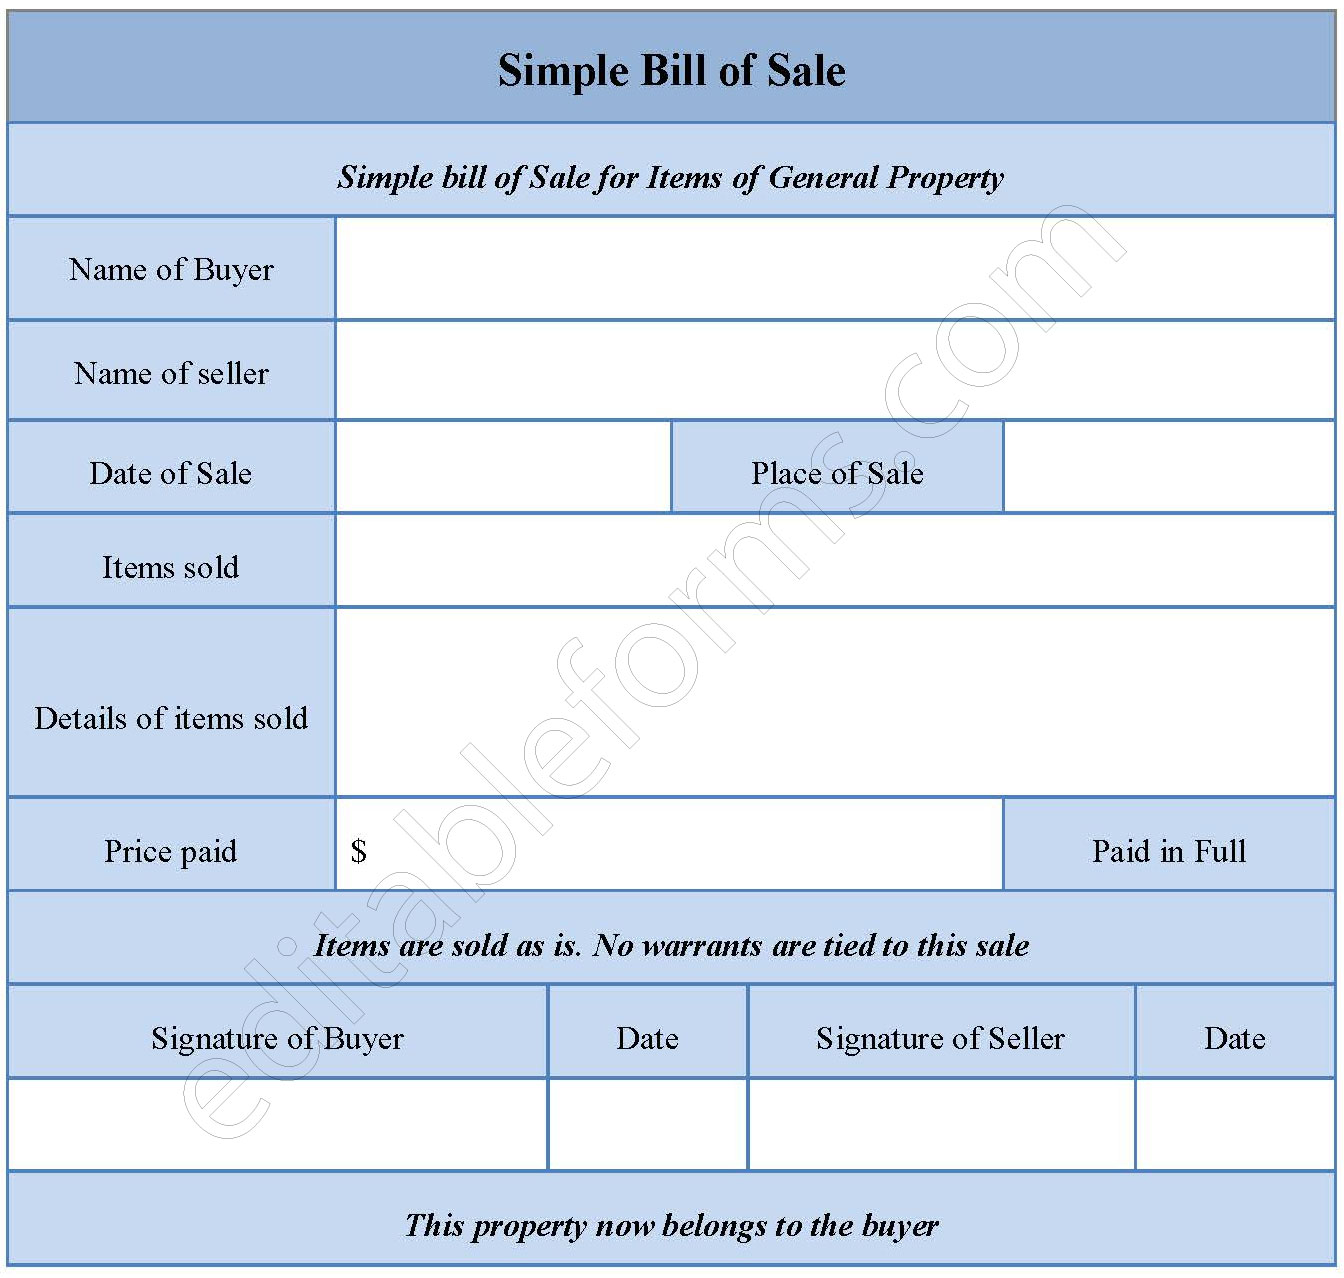 Simple Bill of Sale